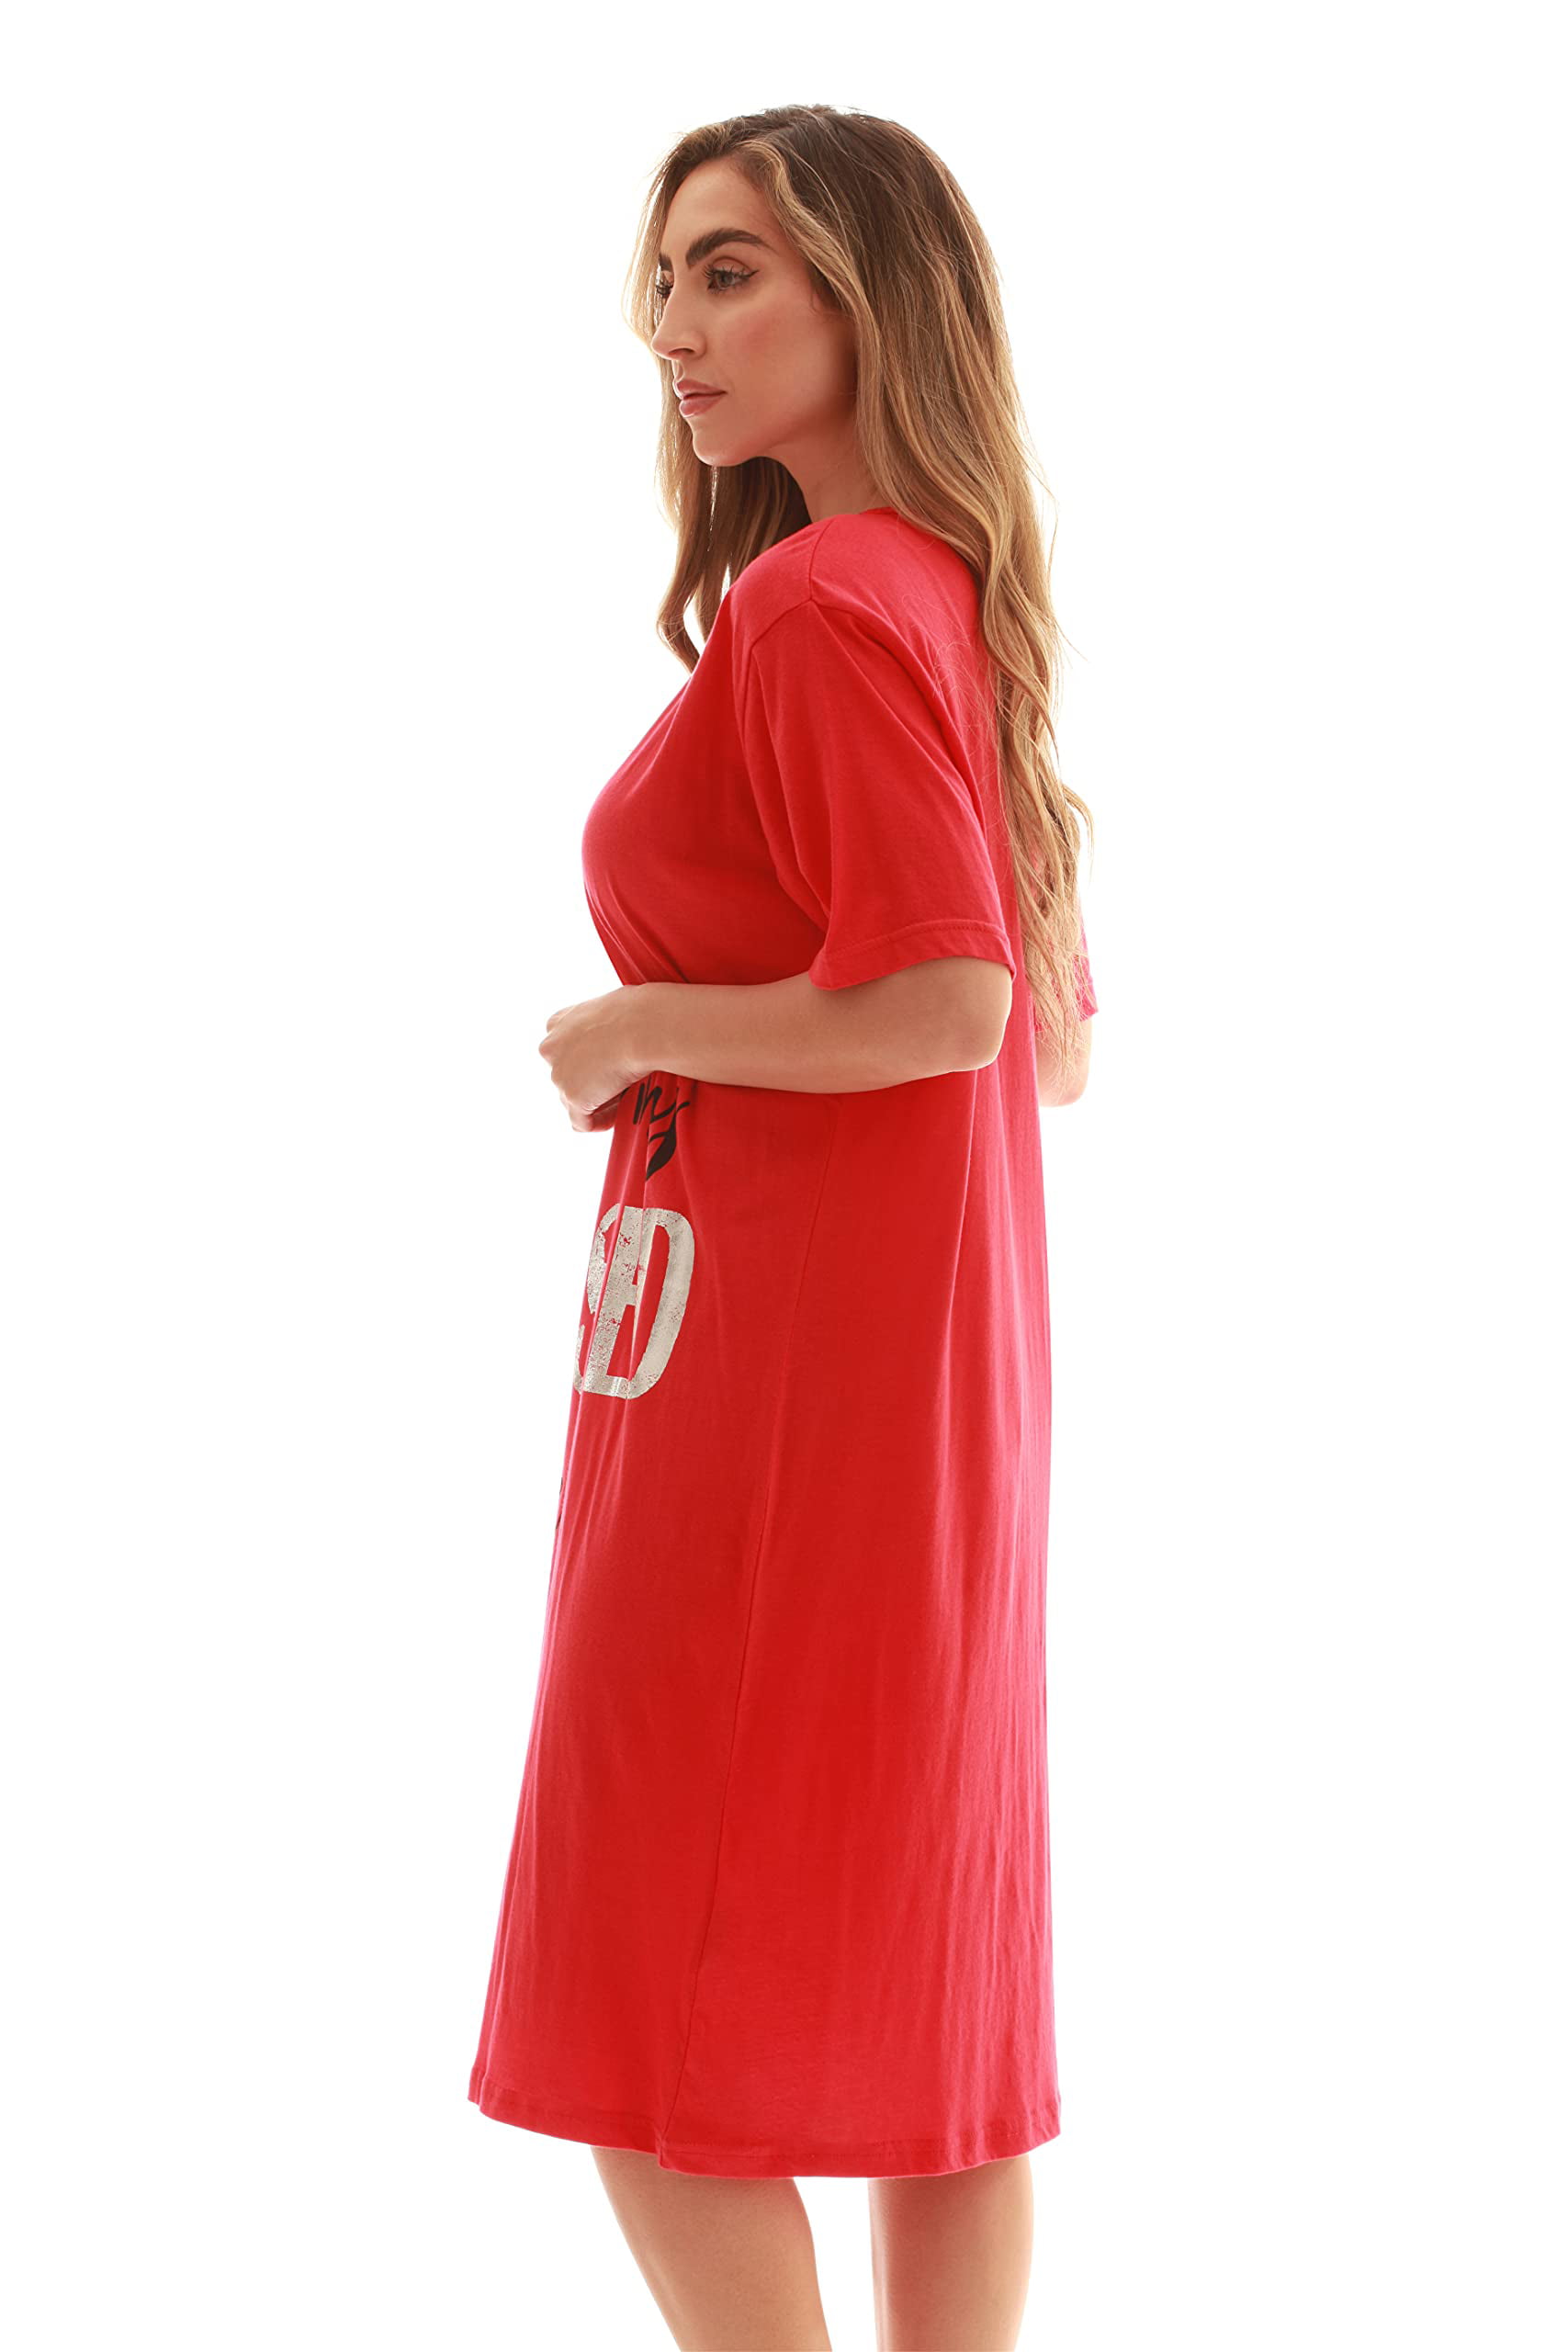 HDE Women's Cotton Nightgowns Short Sleeve Sleep Dress Need More Sleep  4X-5X 